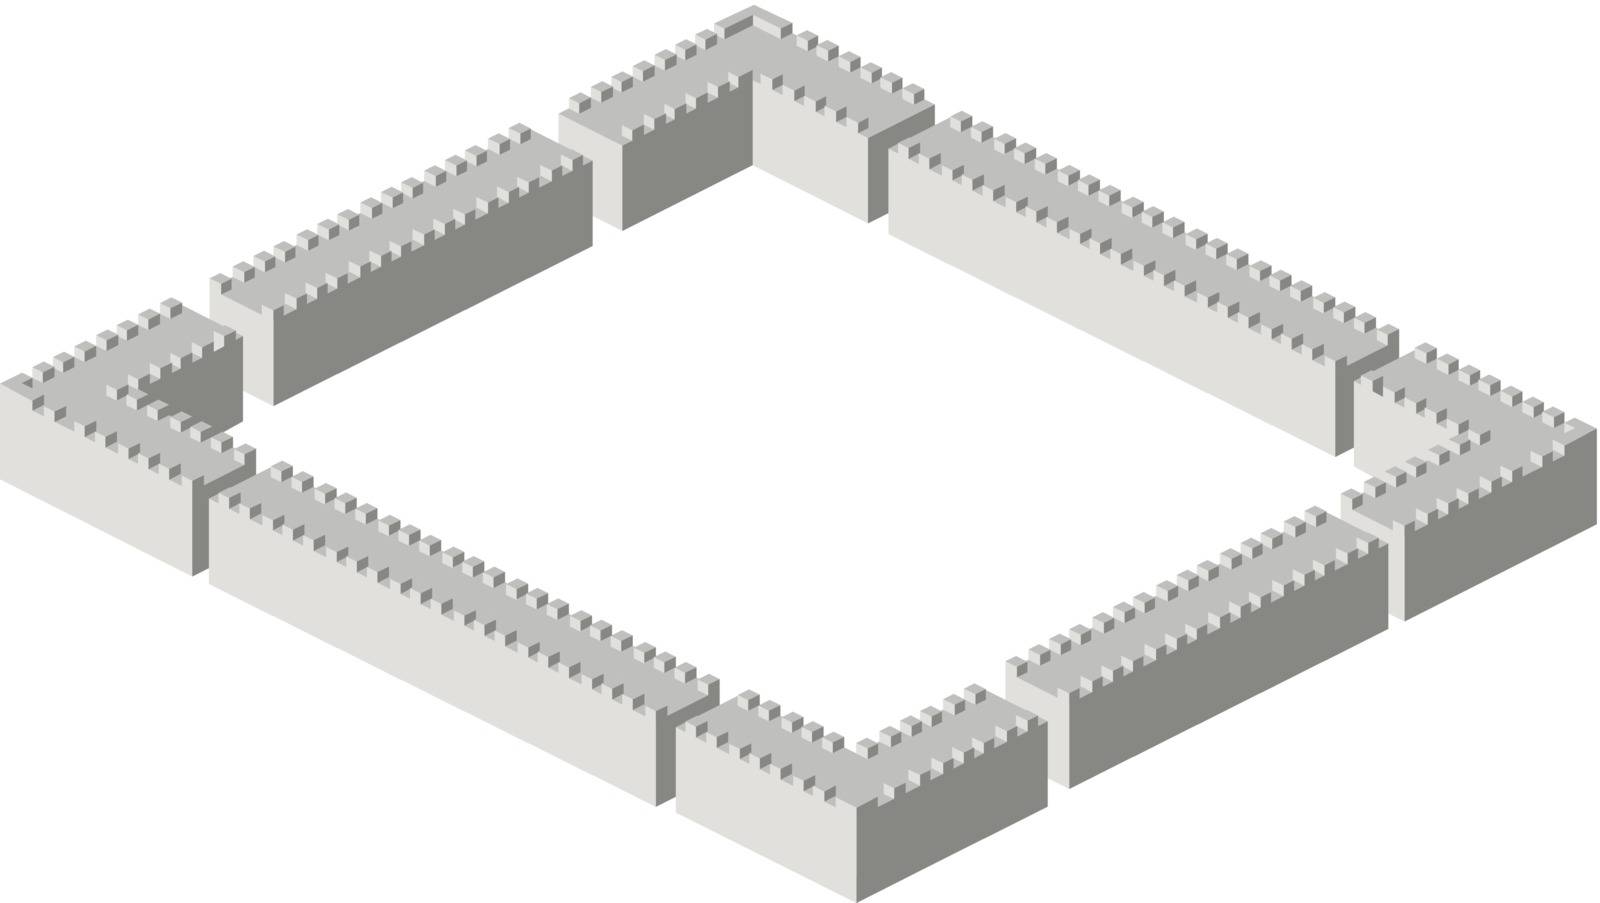 Isometric walls by Lirch